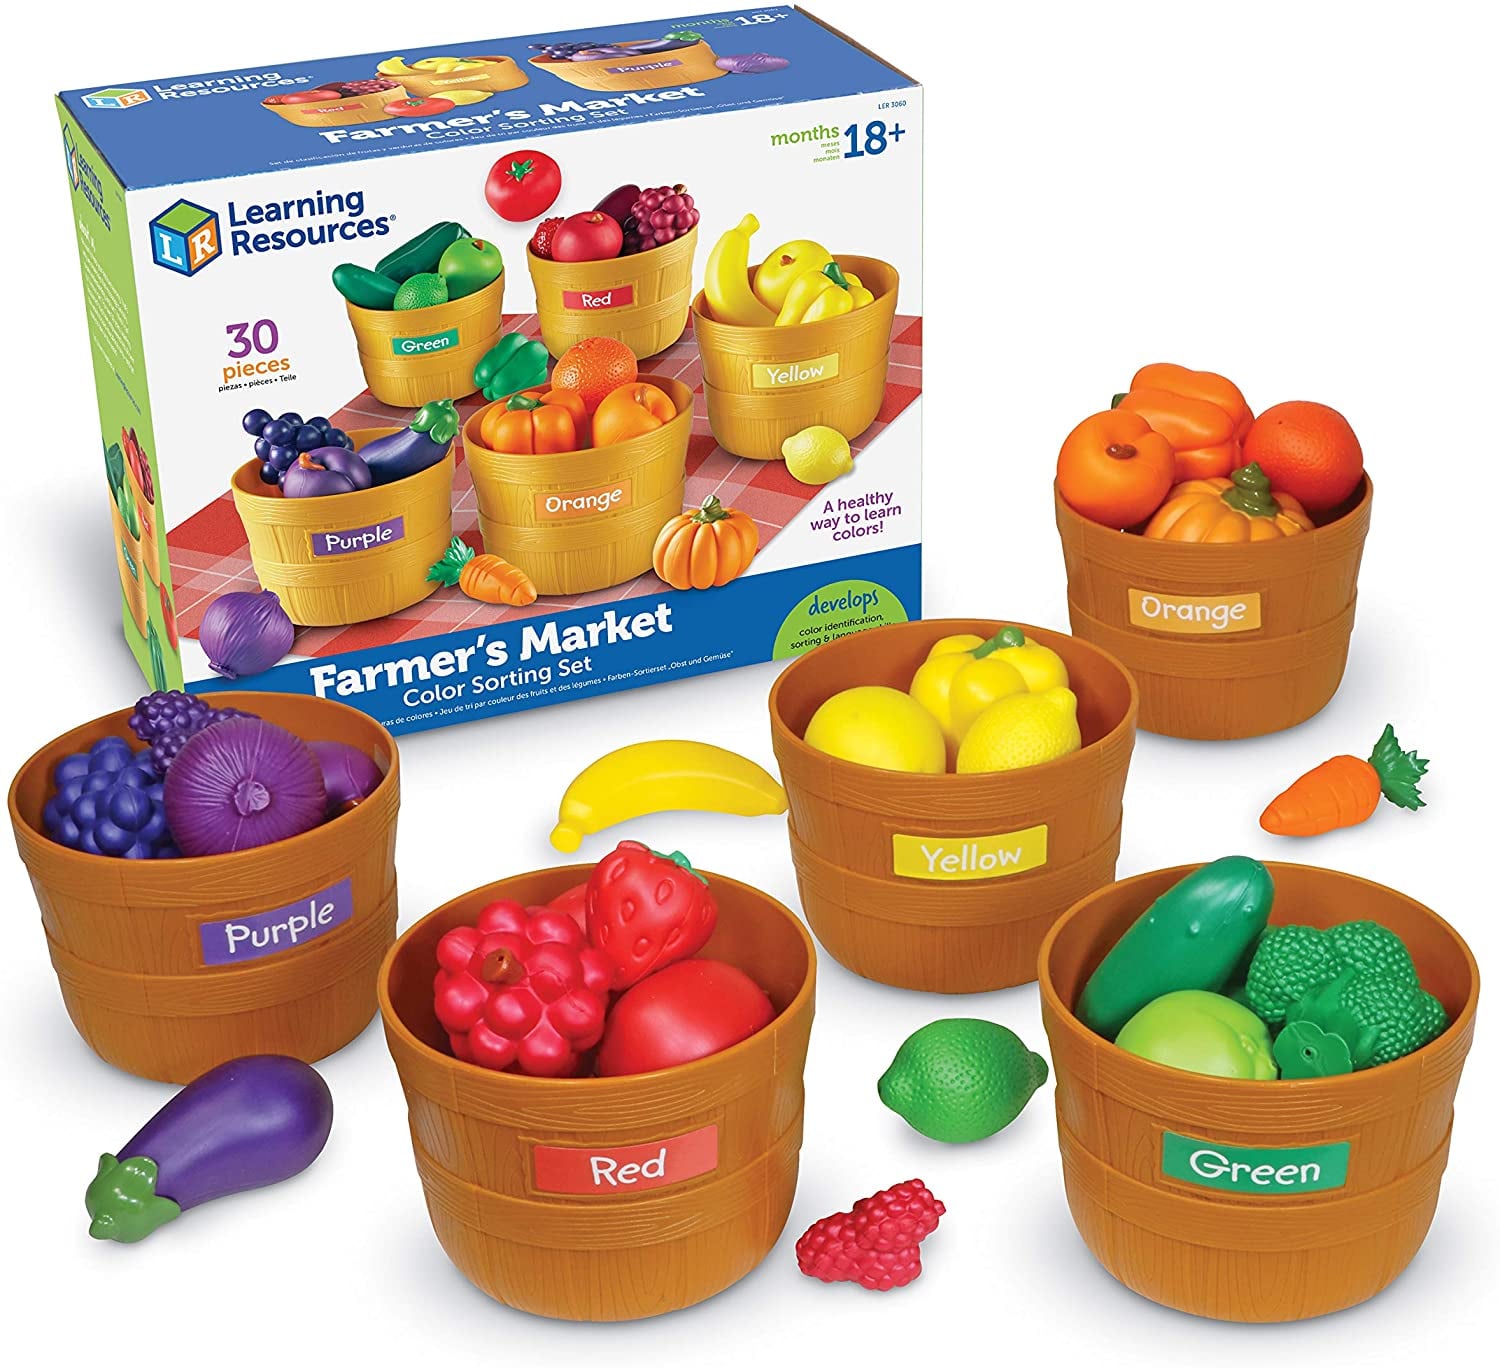 Educational Preschool Toys for Kids - Learn Words, Colors, Songs